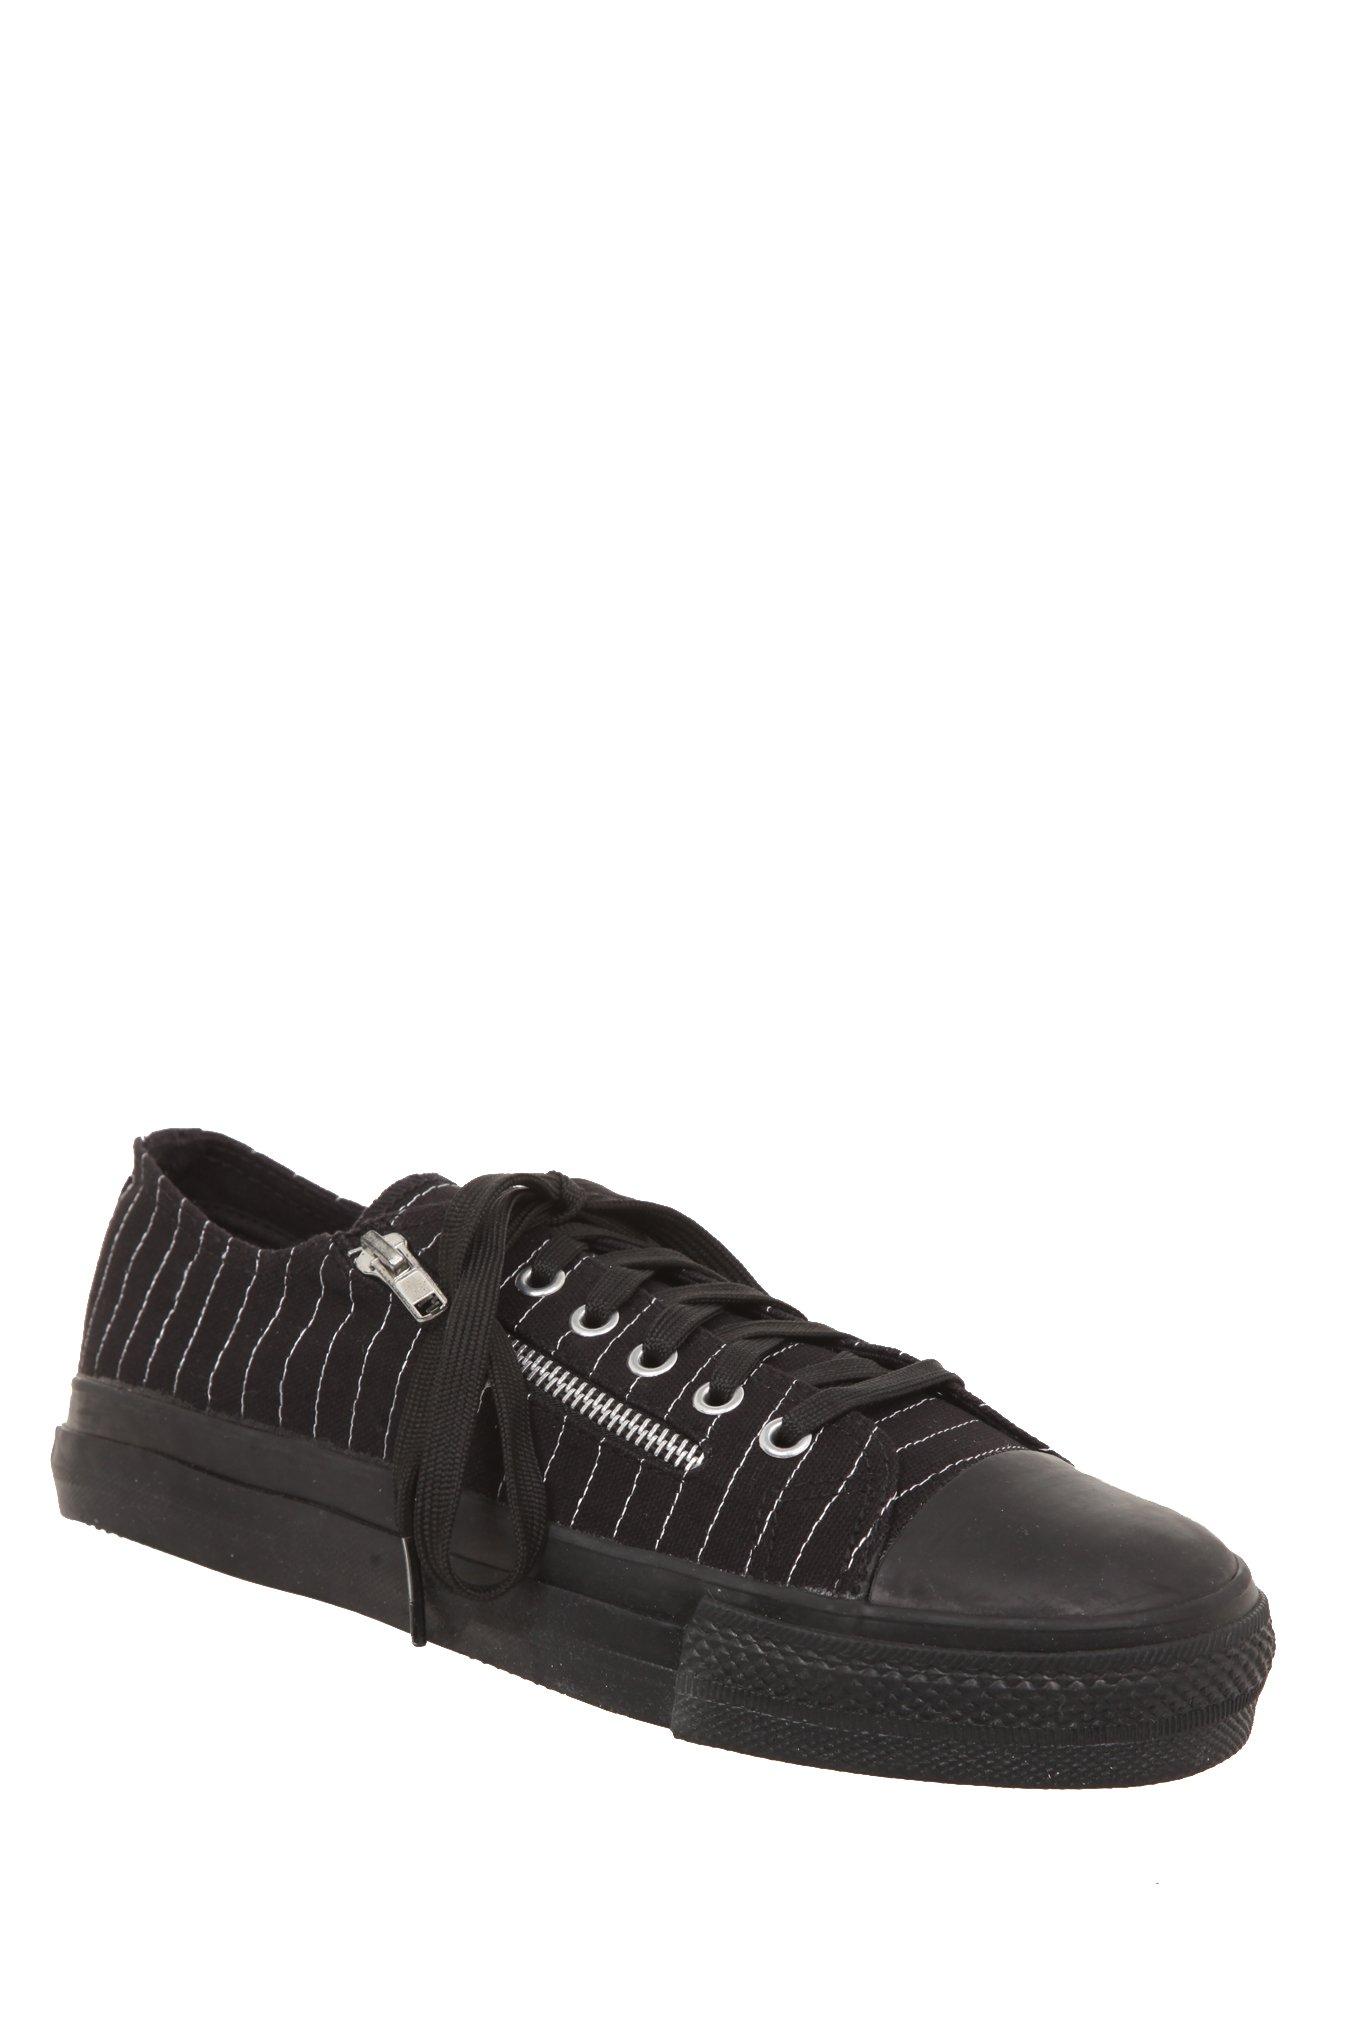 Demonia Deviant Zipper Stripe Canvas Low-Top Sneakers, BLACK, hi-res